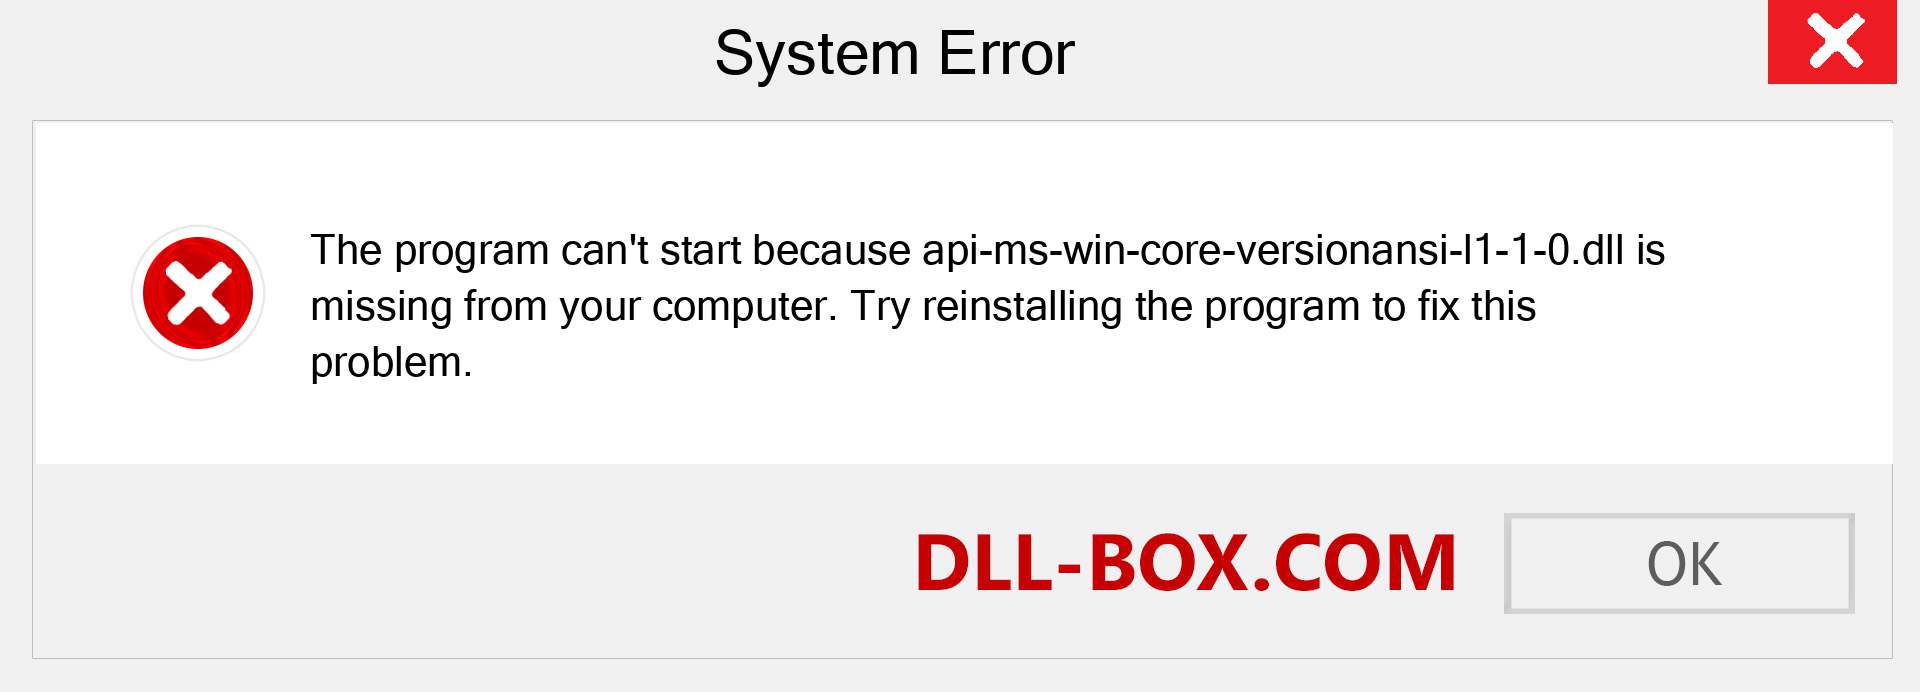  api-ms-win-core-versionansi-l1-1-0.dll file is missing?. Download for Windows 7, 8, 10 - Fix  api-ms-win-core-versionansi-l1-1-0 dll Missing Error on Windows, photos, images